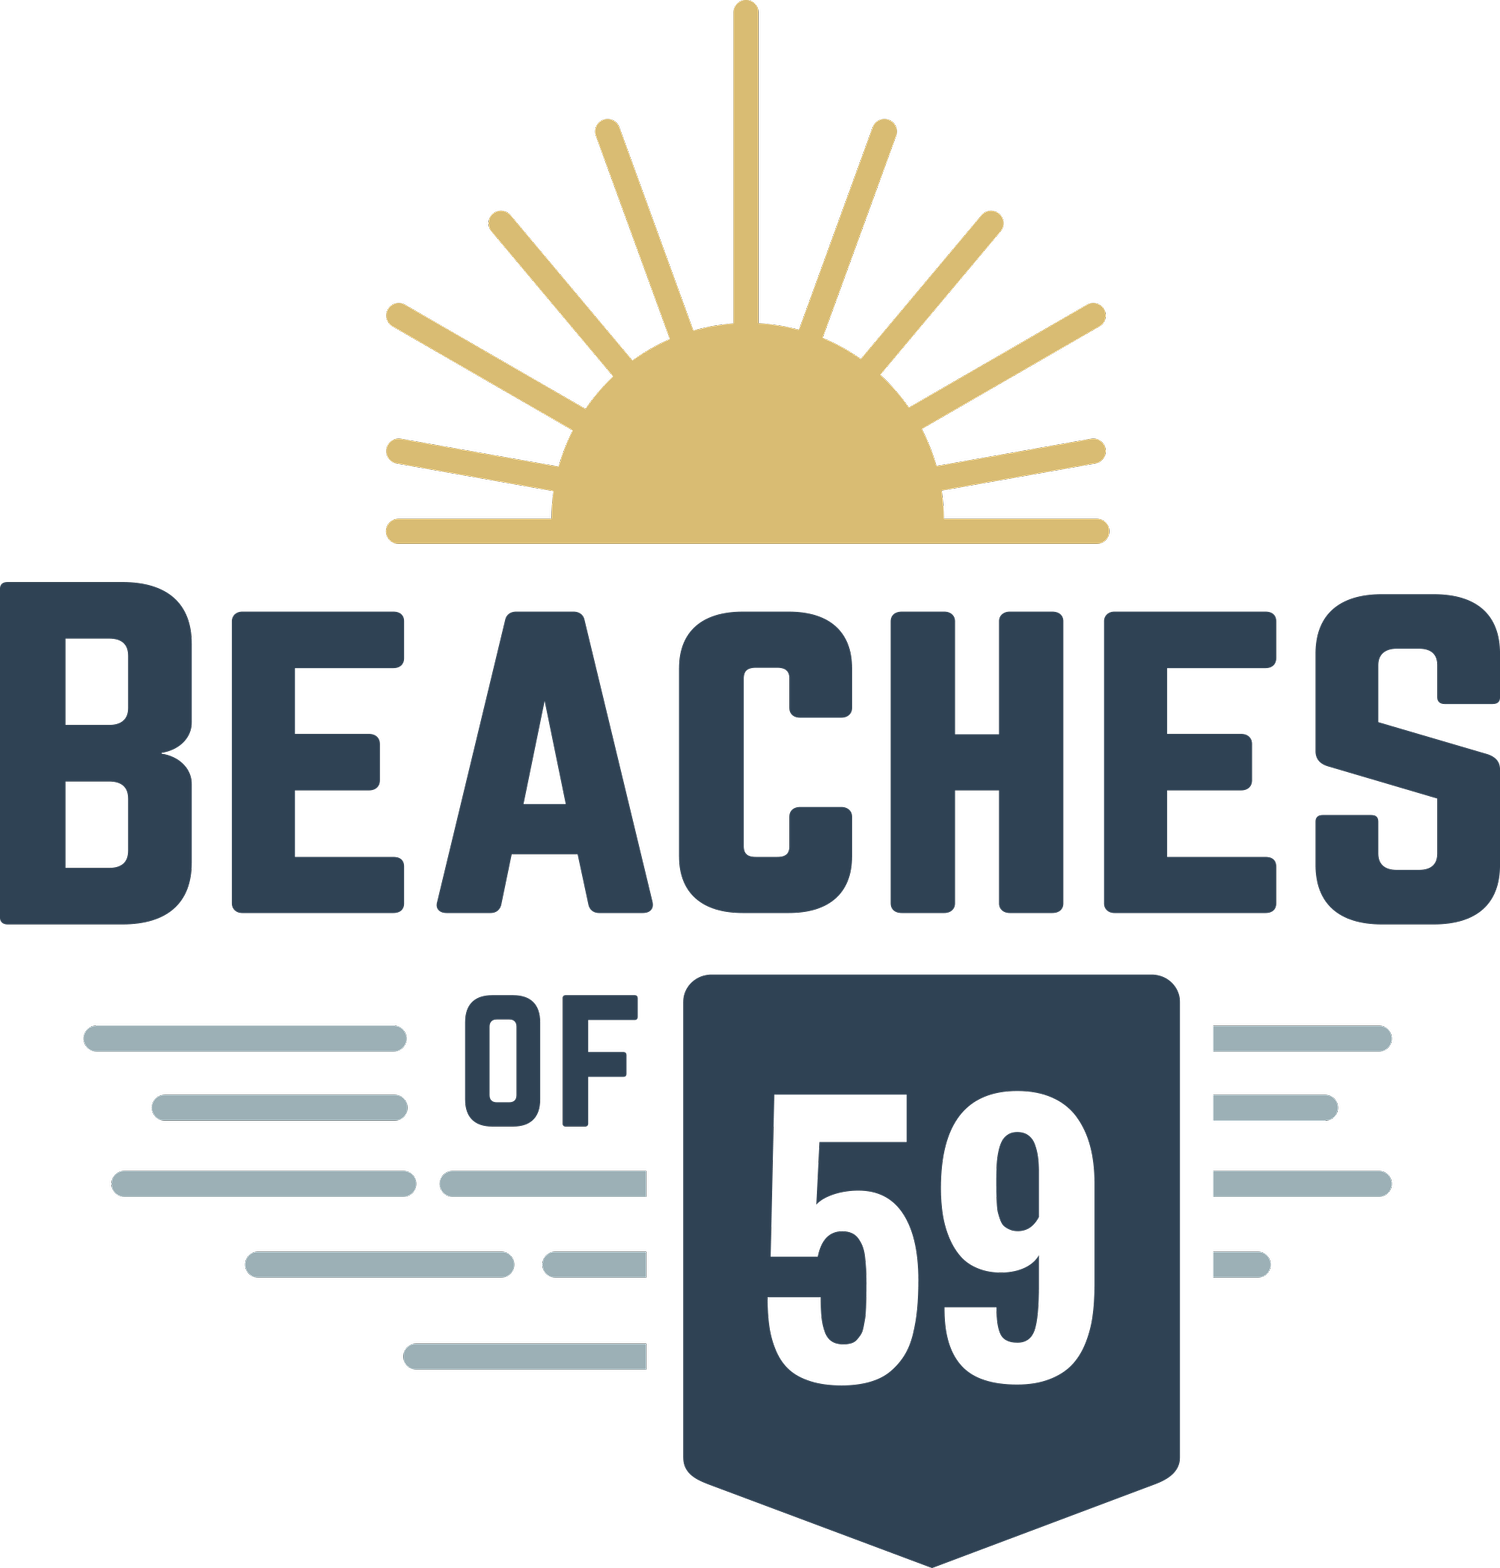 Beaches of 59